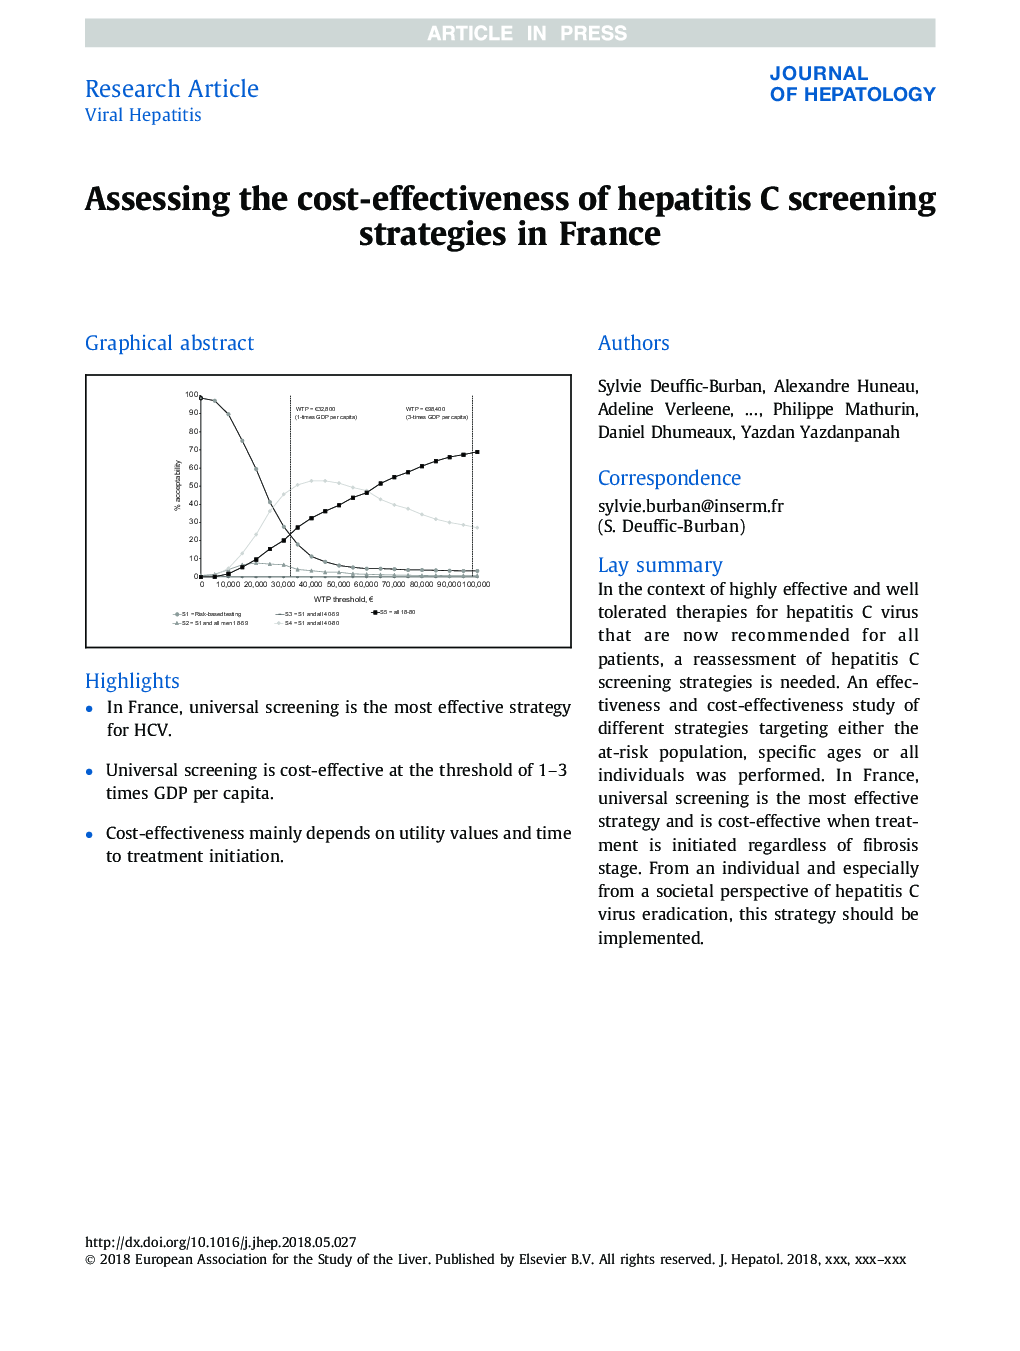 Assessing the cost-effectiveness of hepatitis C screening strategies in France